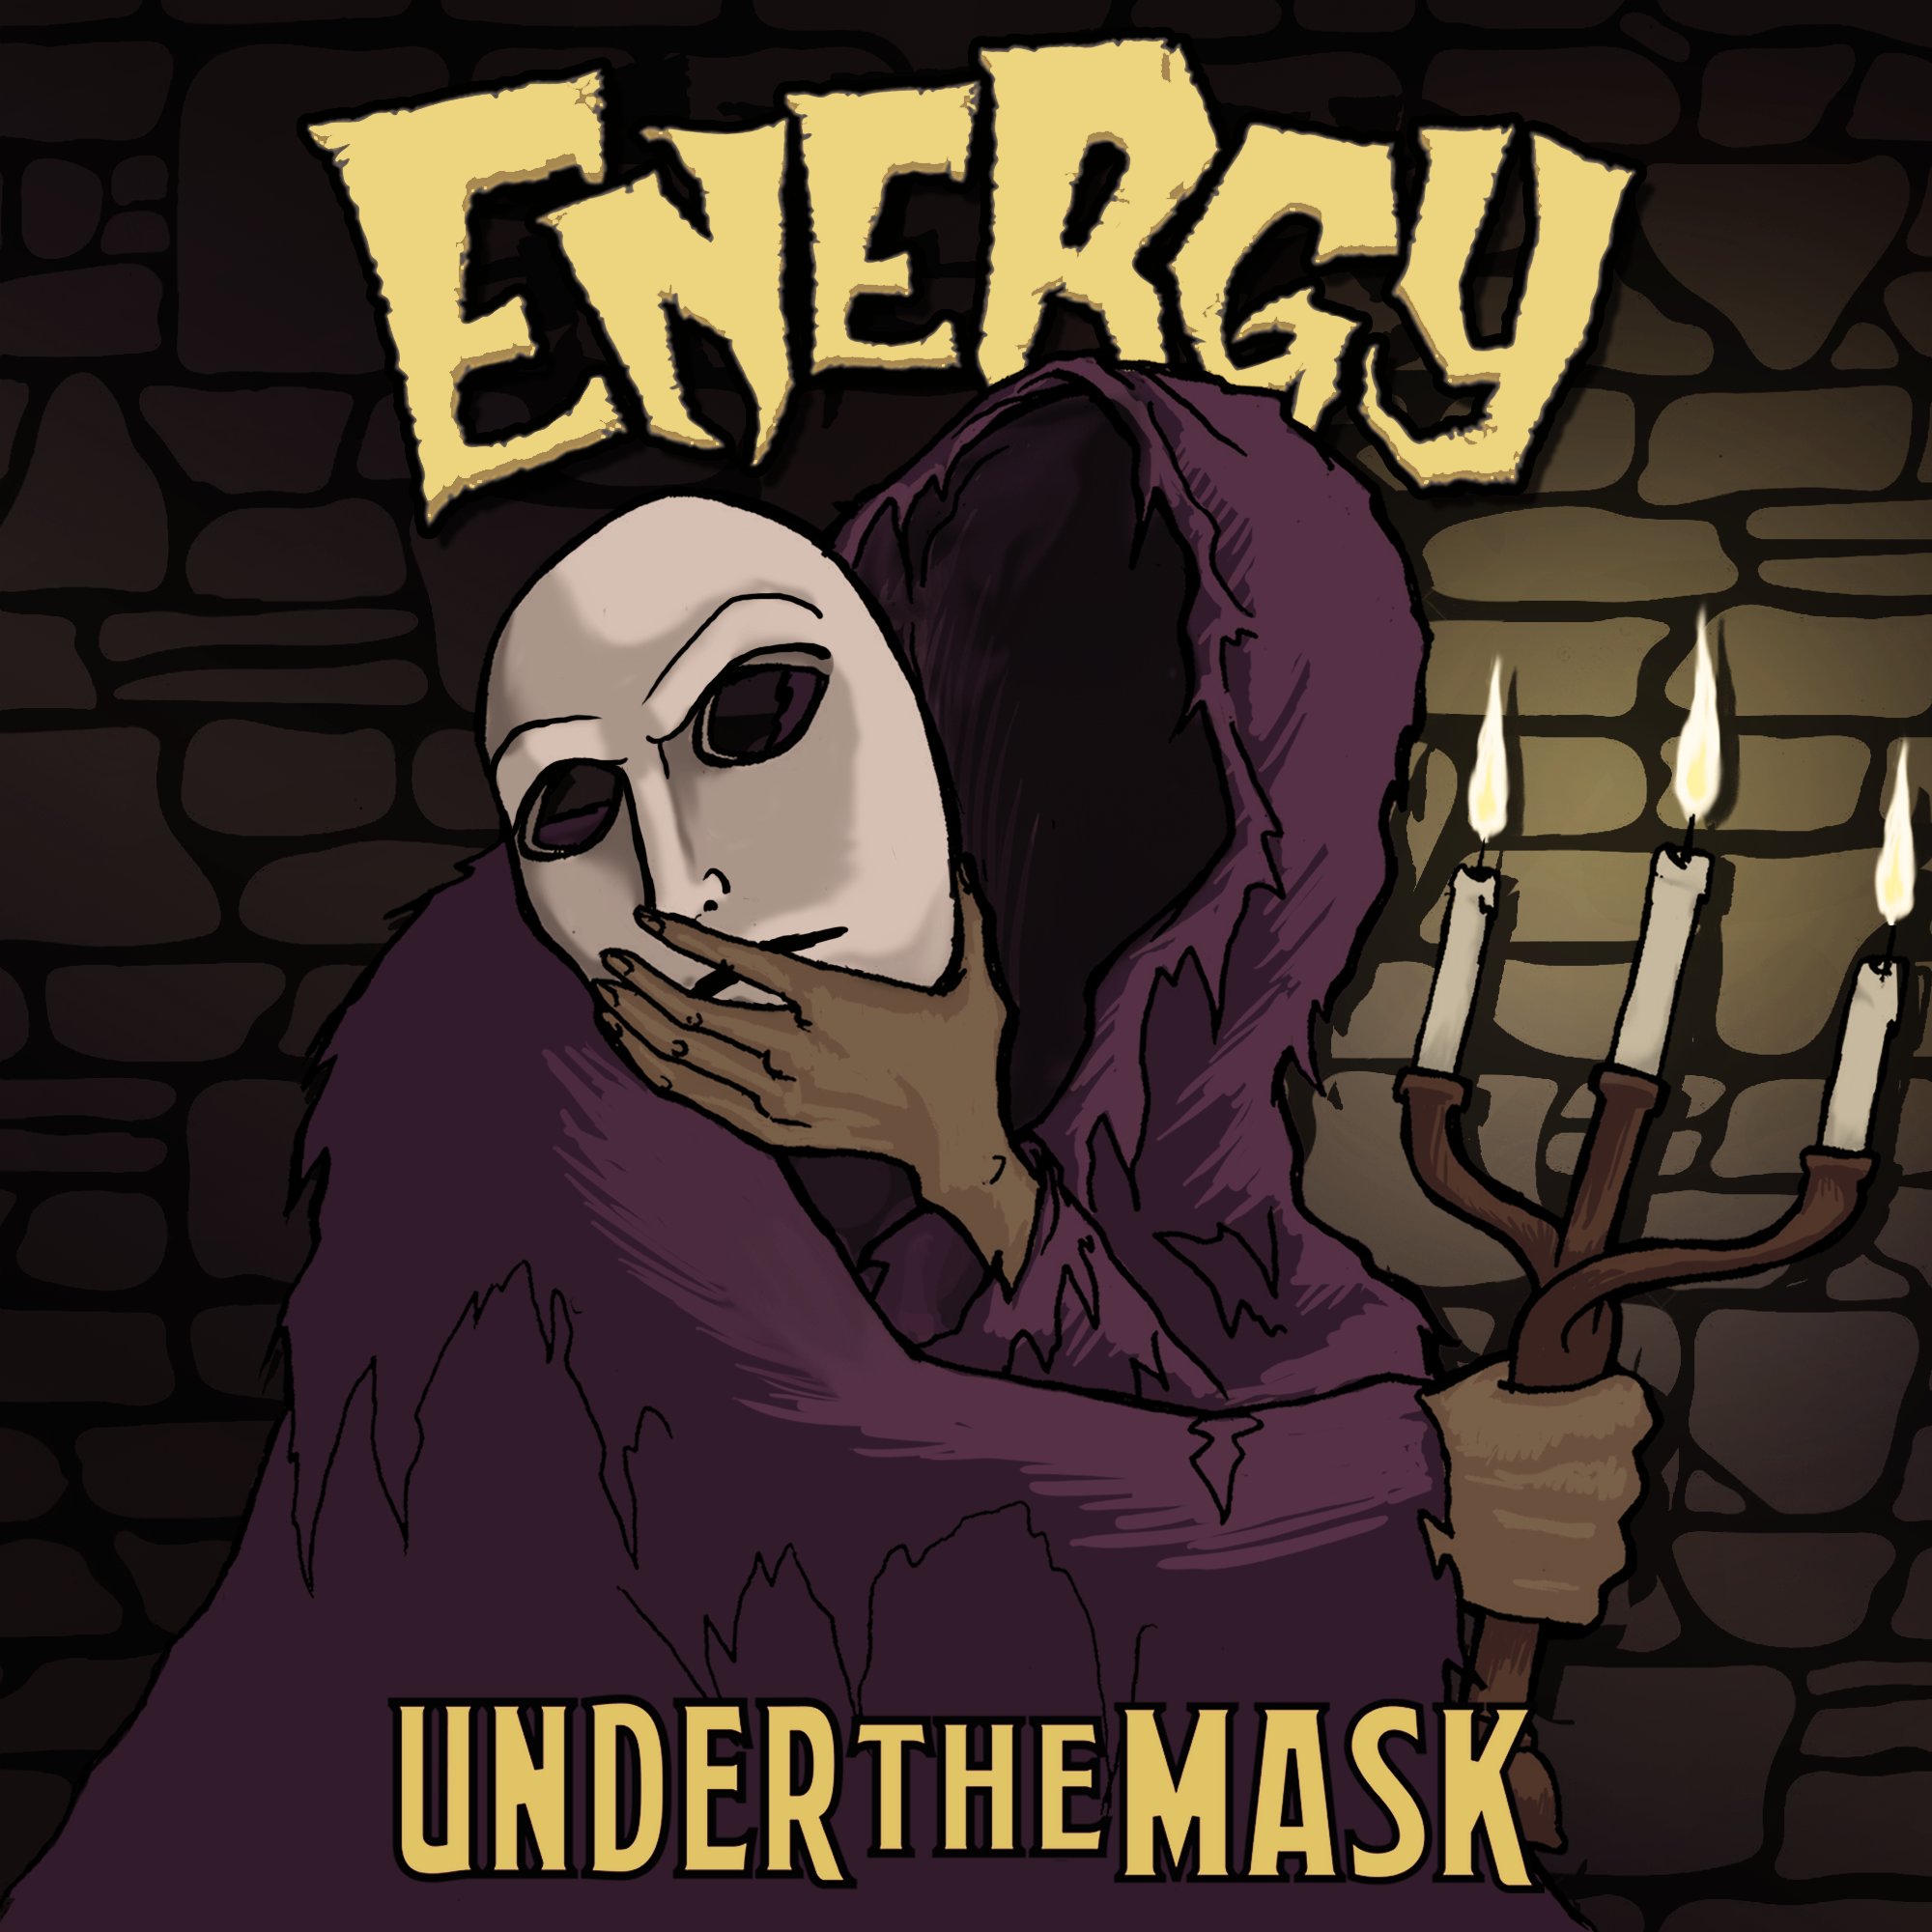 Under mask. Last Energy.